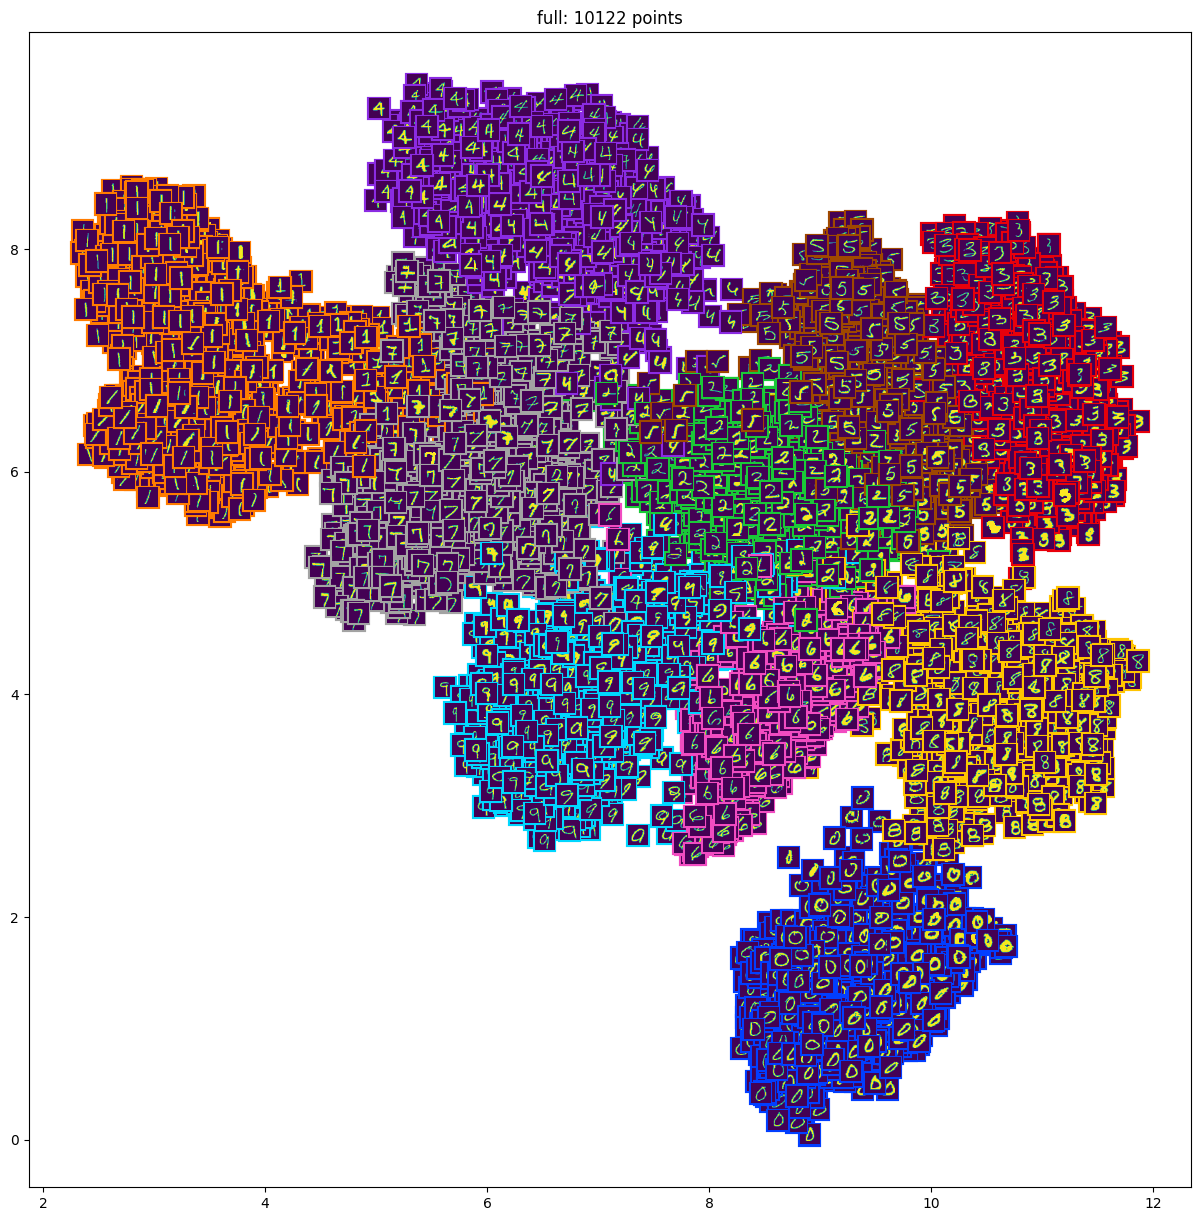 Representation of computer vision embedding visualization of MNIST dataset.